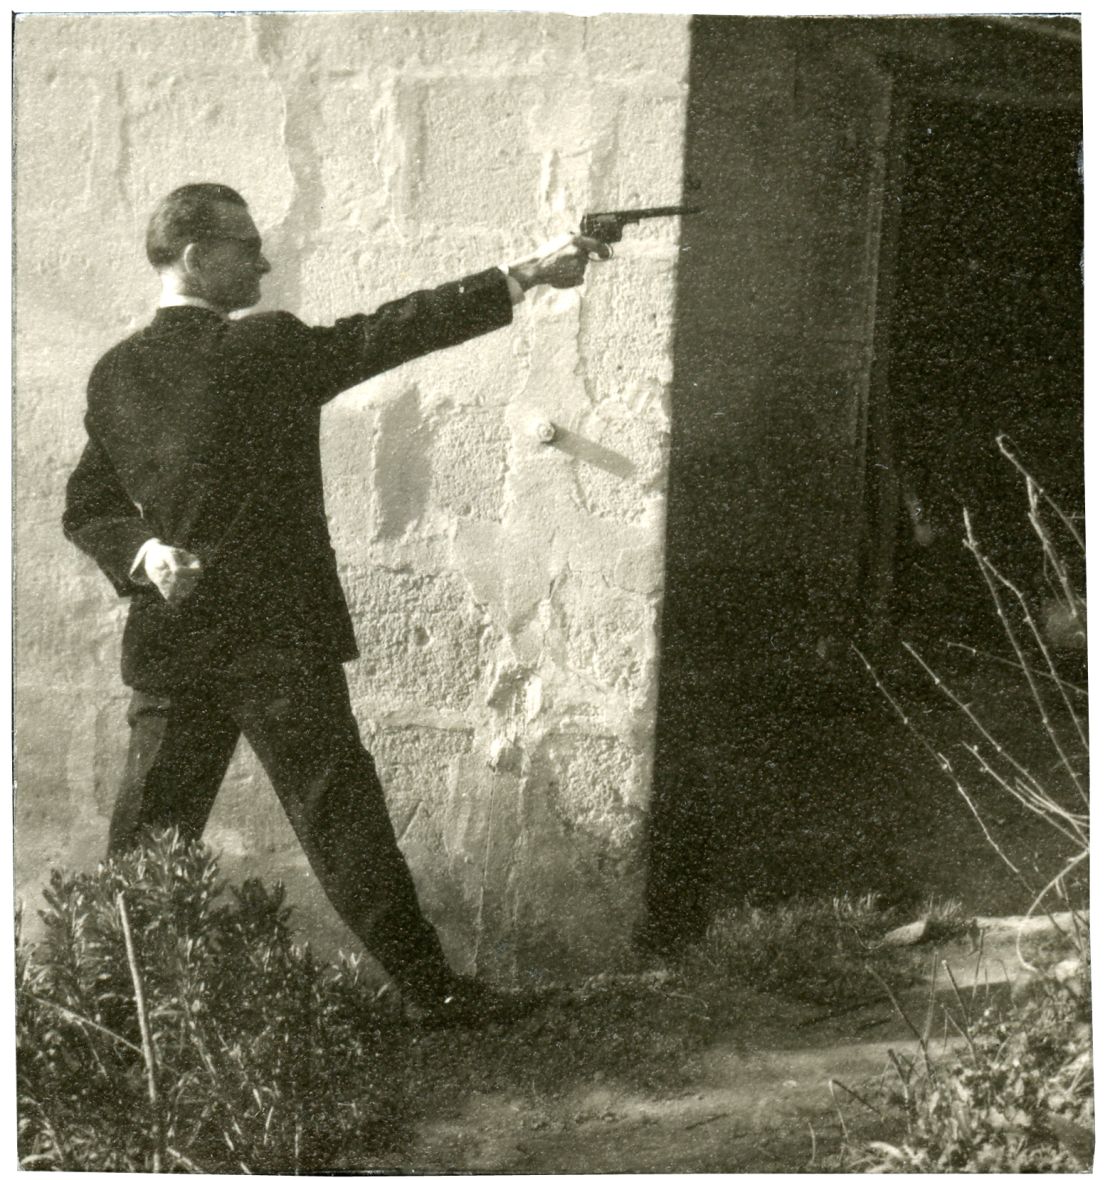 "Pierre Molinier tirant au pistolet" (Pierre Molinier draws a pistol), circa 1955